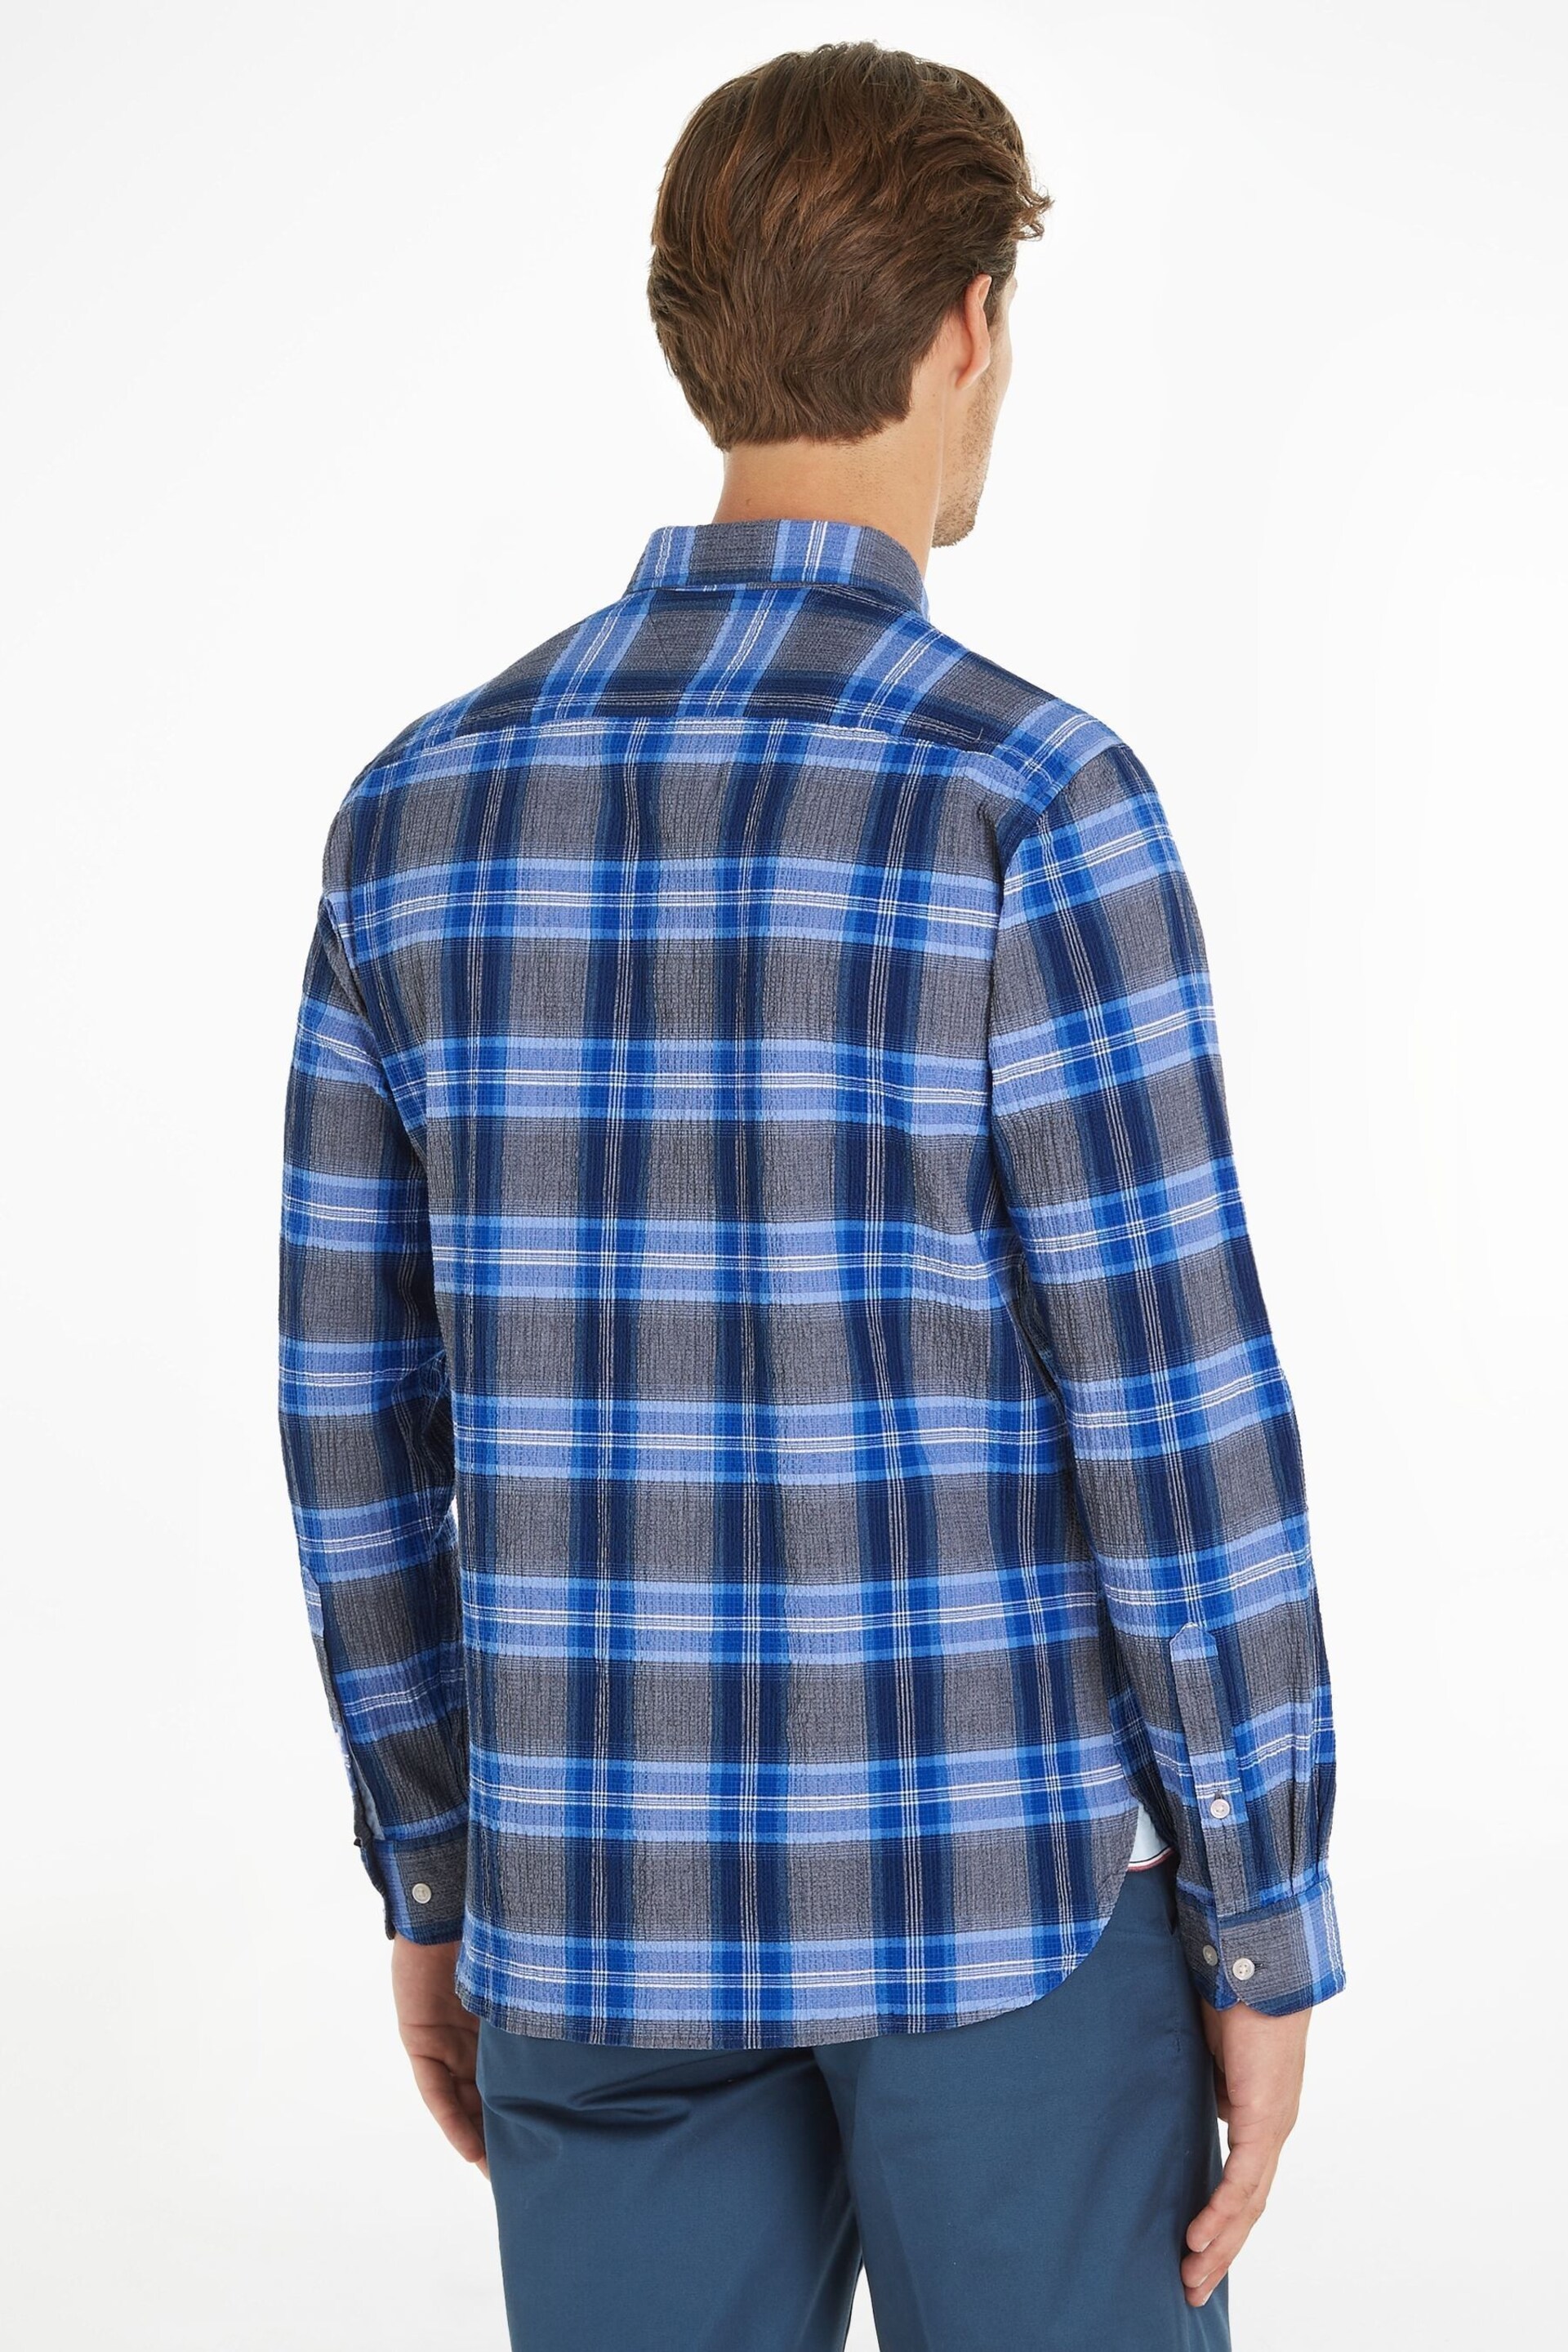 Tommy Hilfiger Blue Tartan Shirt - Image 2 of 6